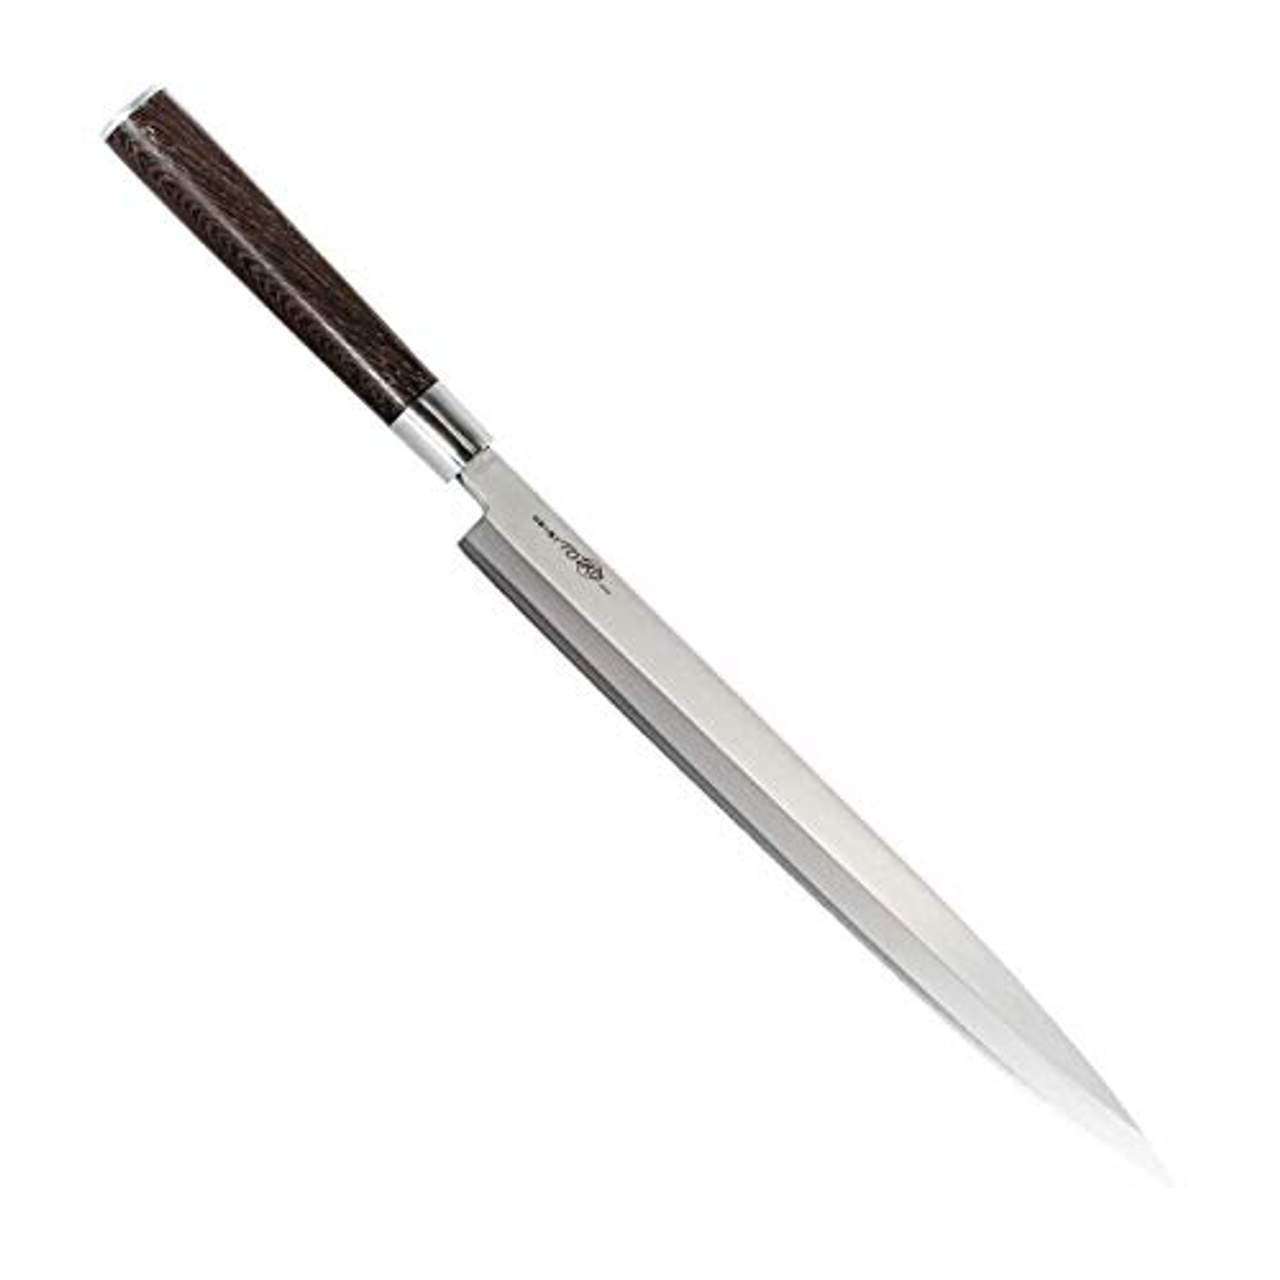 Totiko Japan Knives professionelles Japanisches Küchenmesser